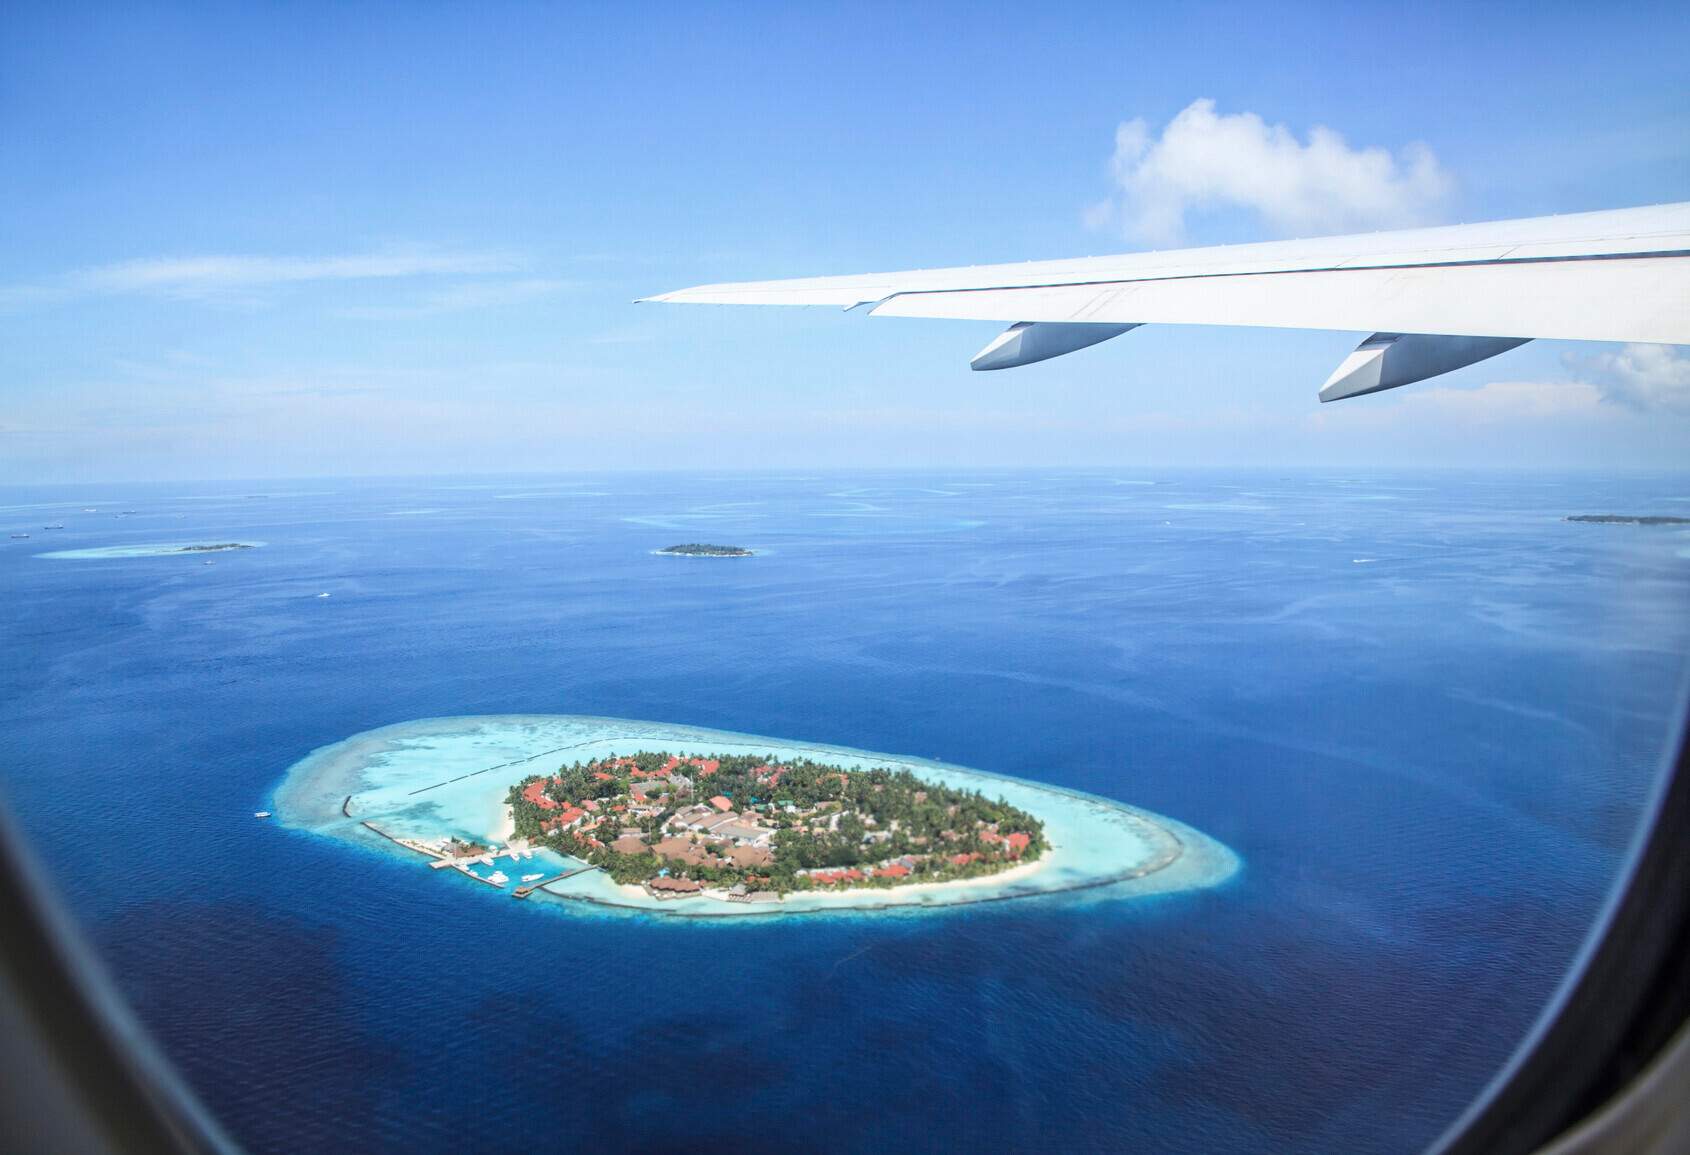 DEST_MALDIVES_THEME_FLIGHT_STOCKSY_871328